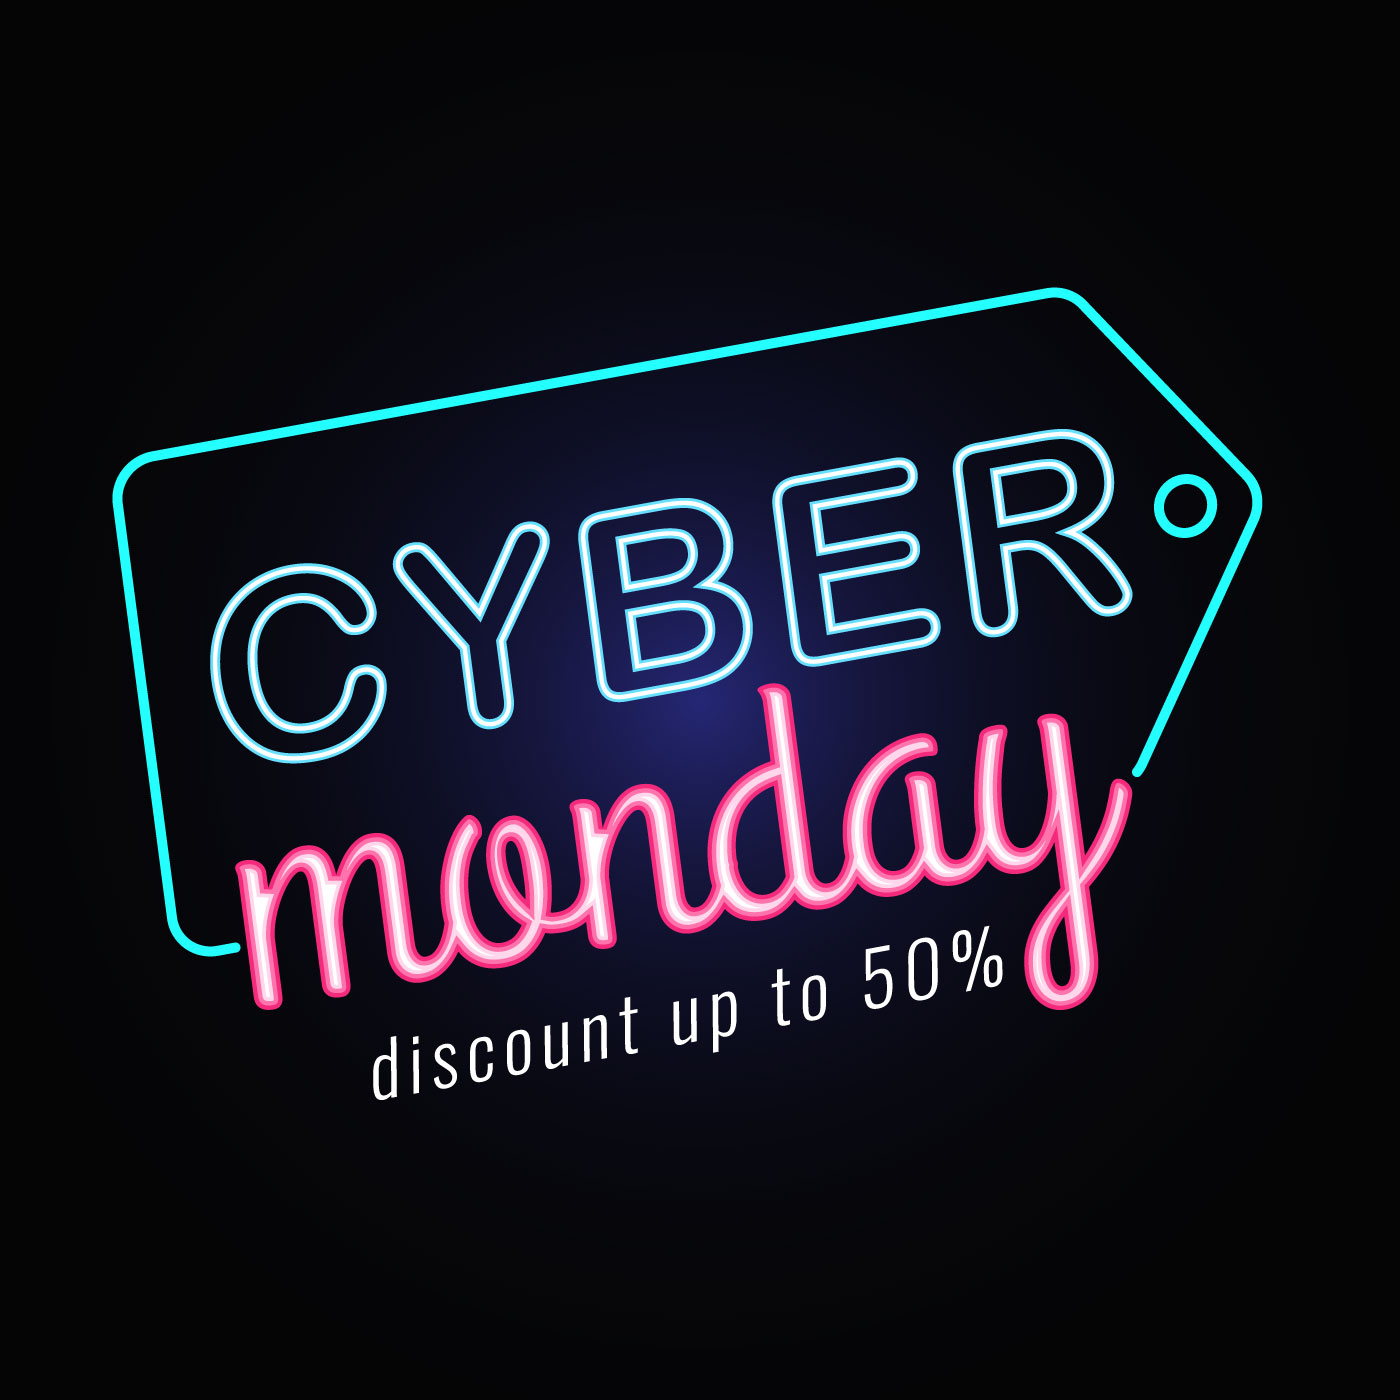 Cyber Monday Sale Neon - Download Free Vectors, Clipart Graphics & Vector Art